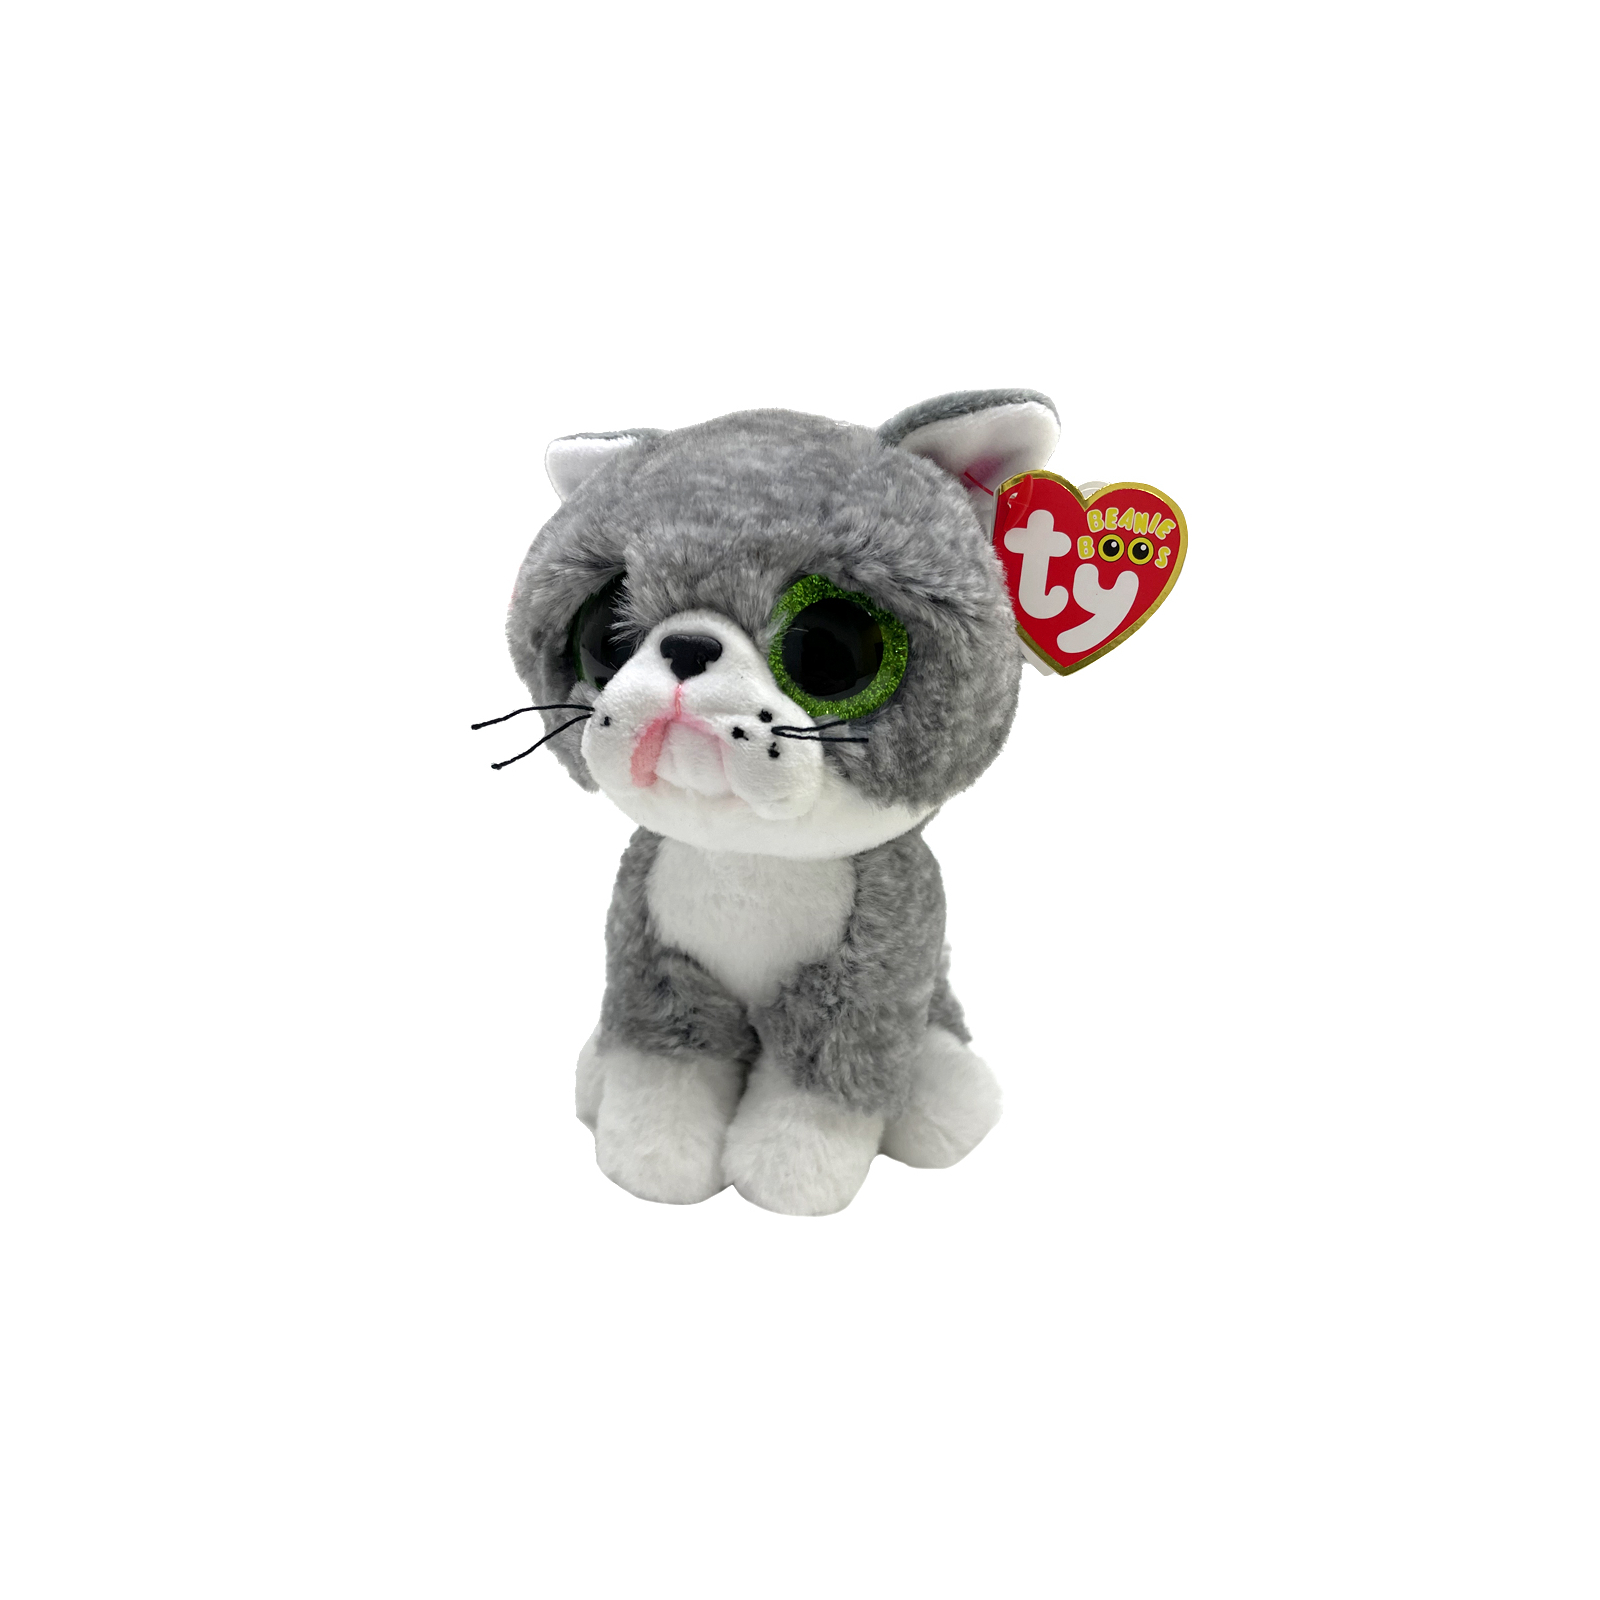 М'яка іграшка Ty Beanie Boos Cірий котик FERGUS (36581)